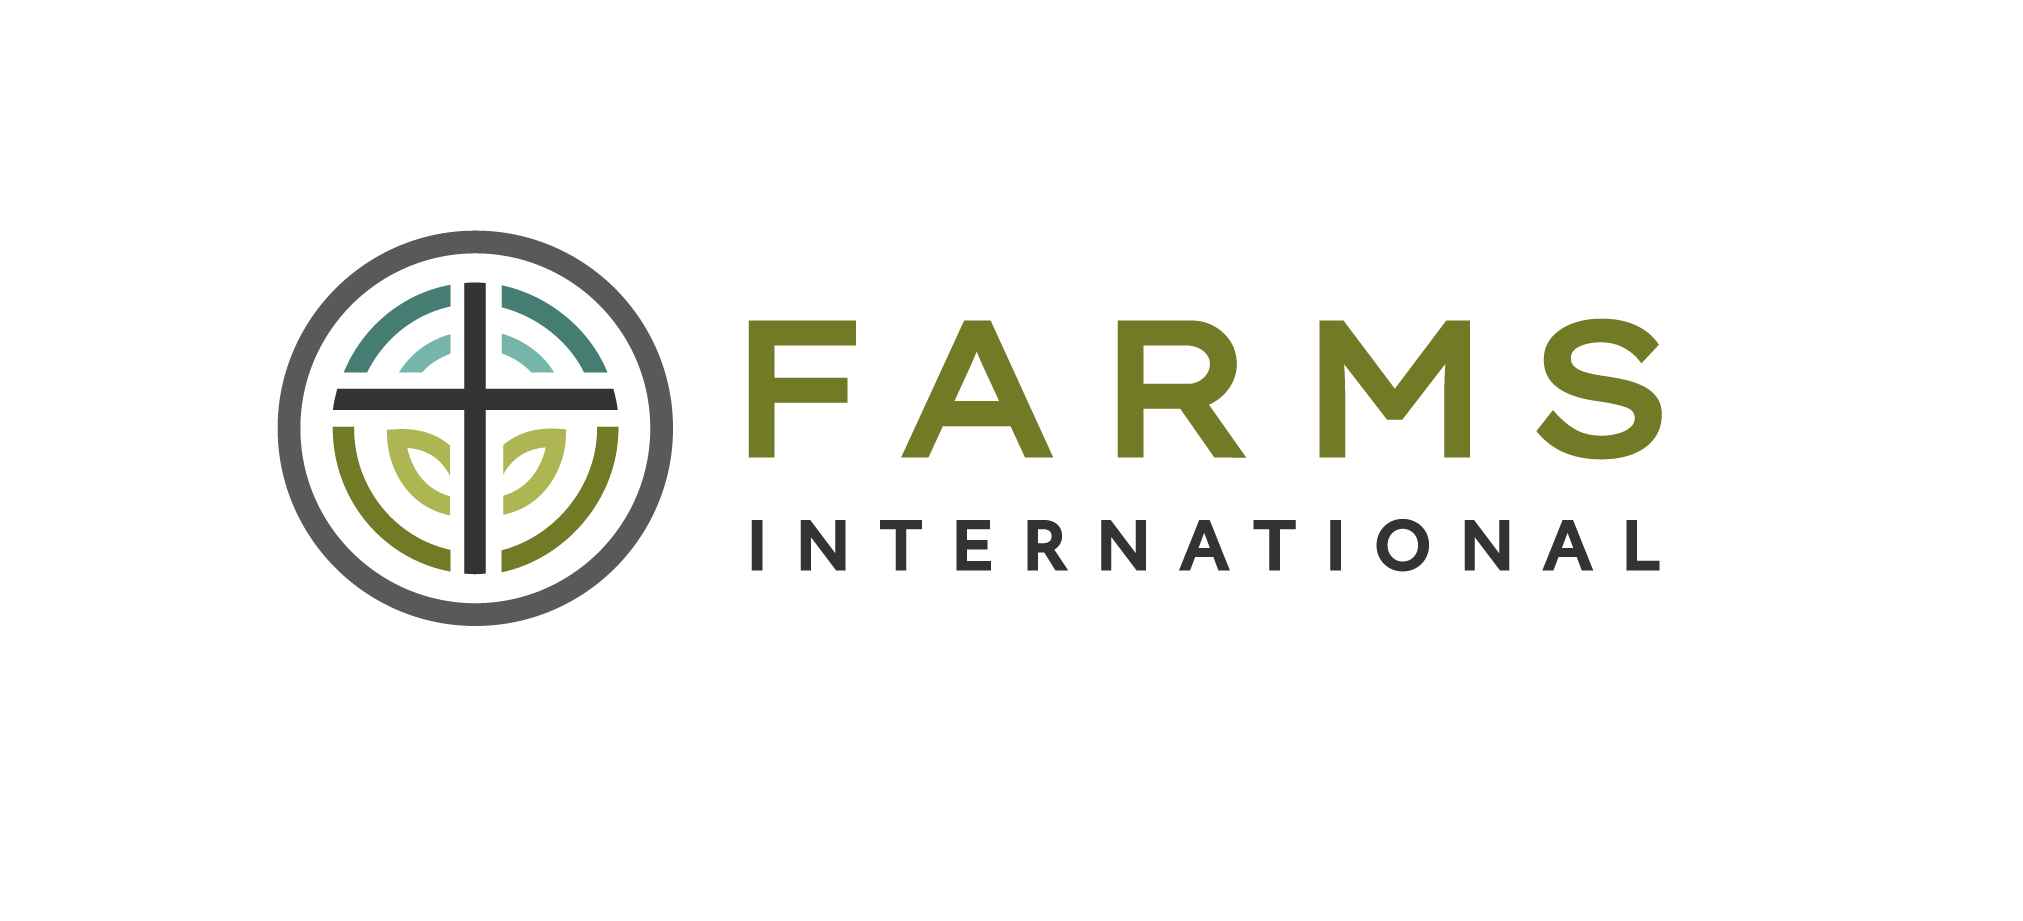 FARMS International